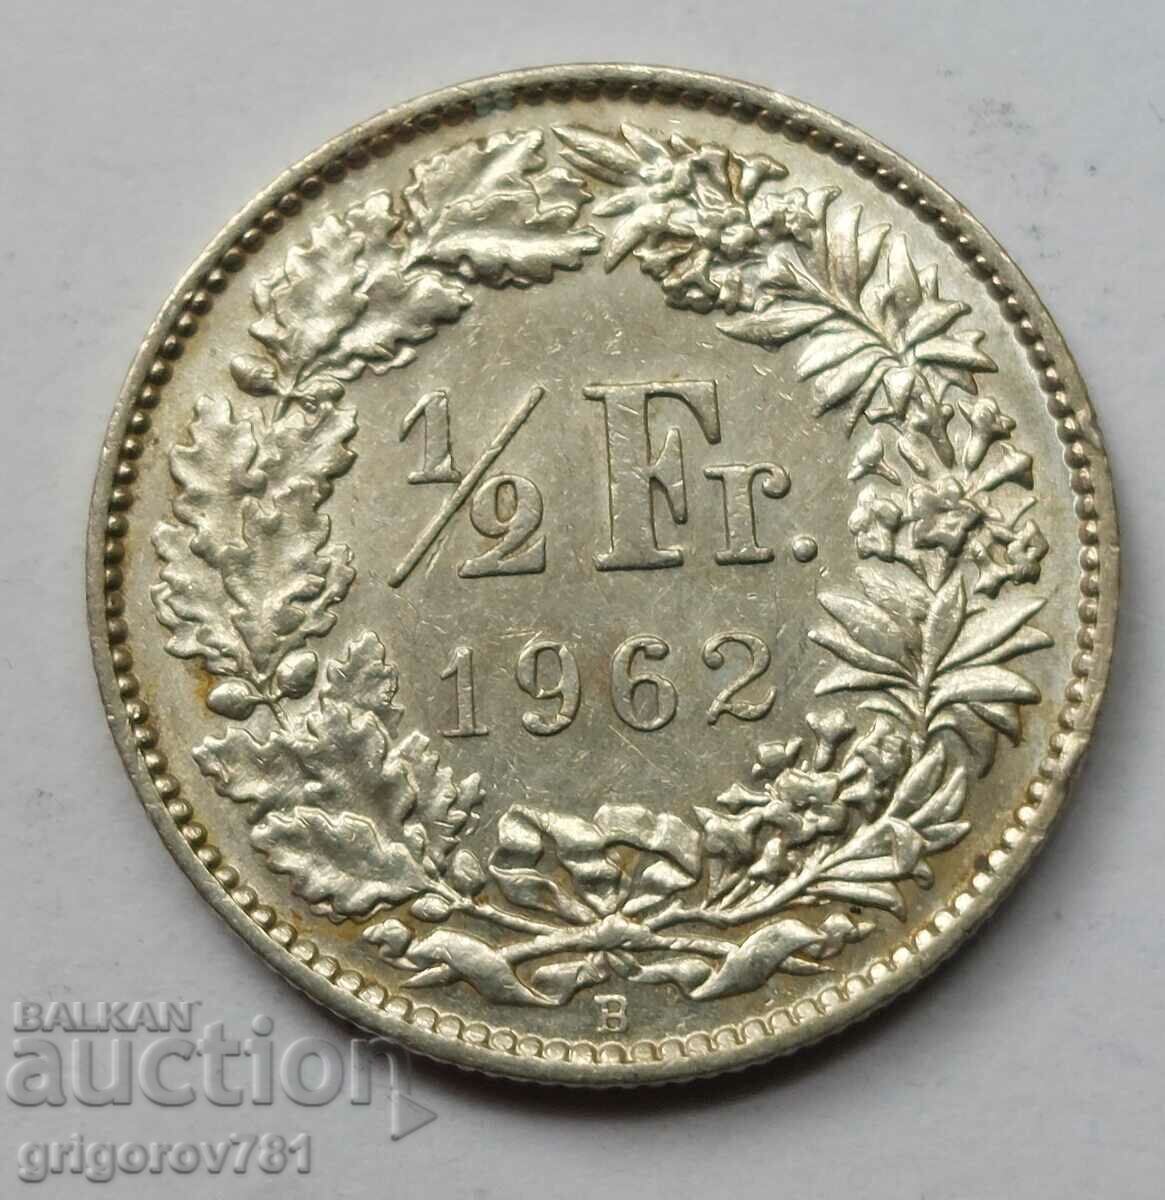 1/2 Franc Silver Switzerland 1962 B - Silver Coin #78